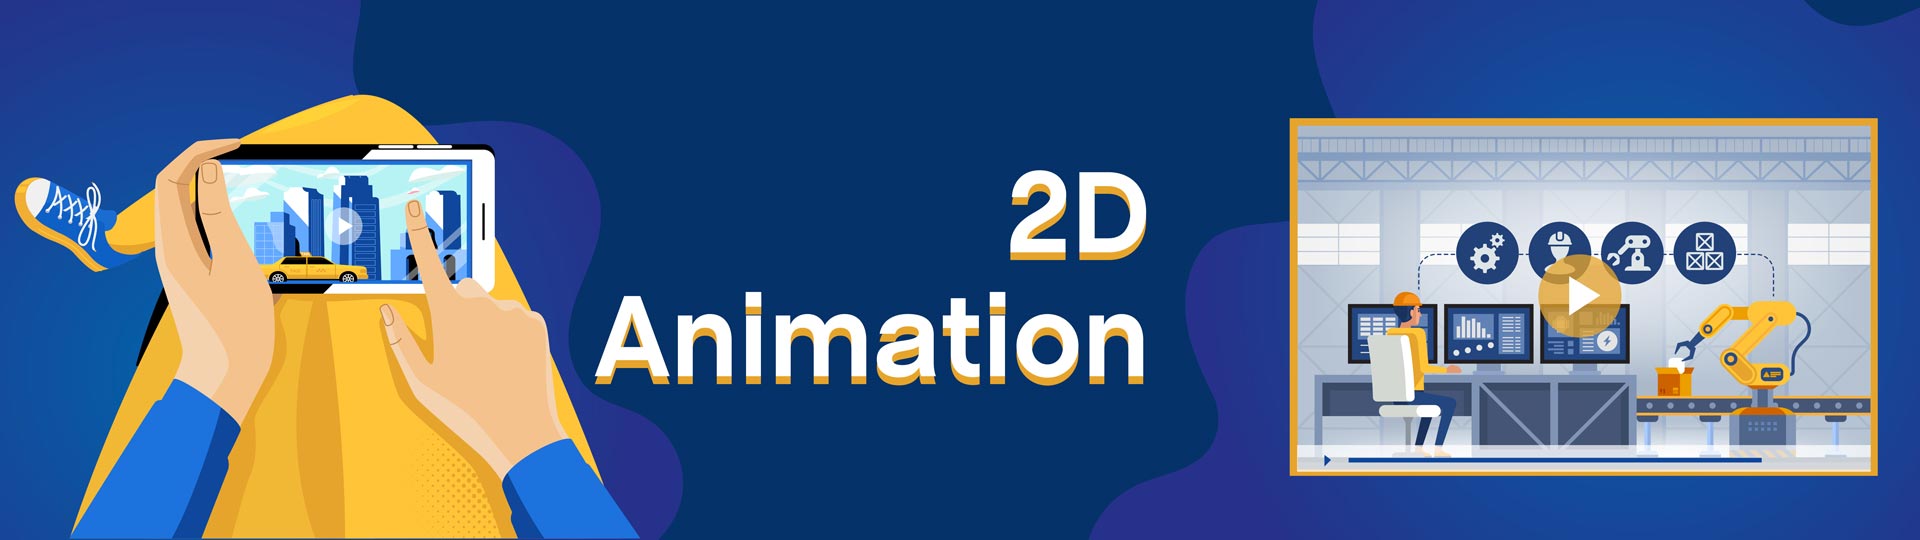 2d-animation